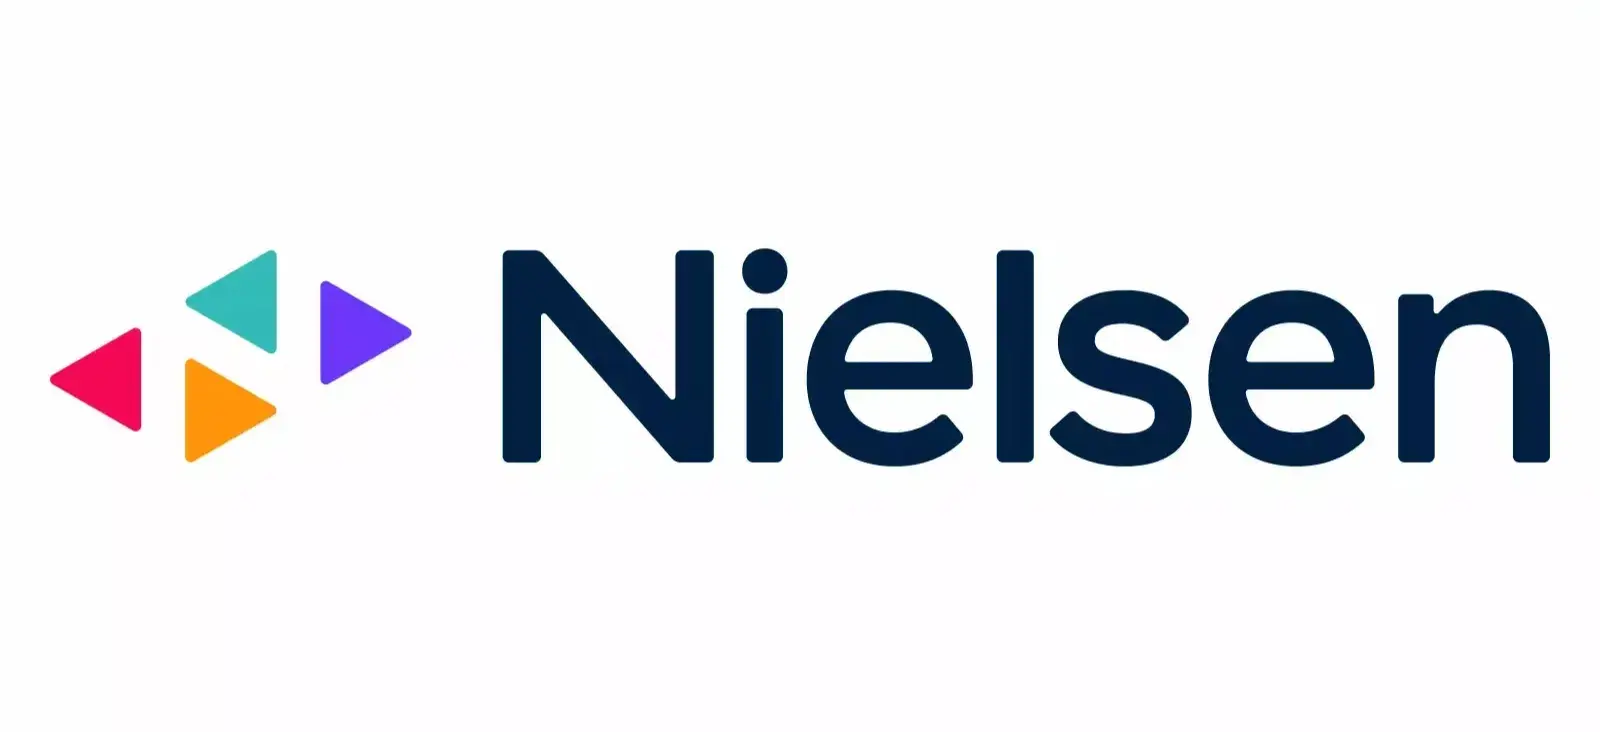 NIELSEN_T.webp